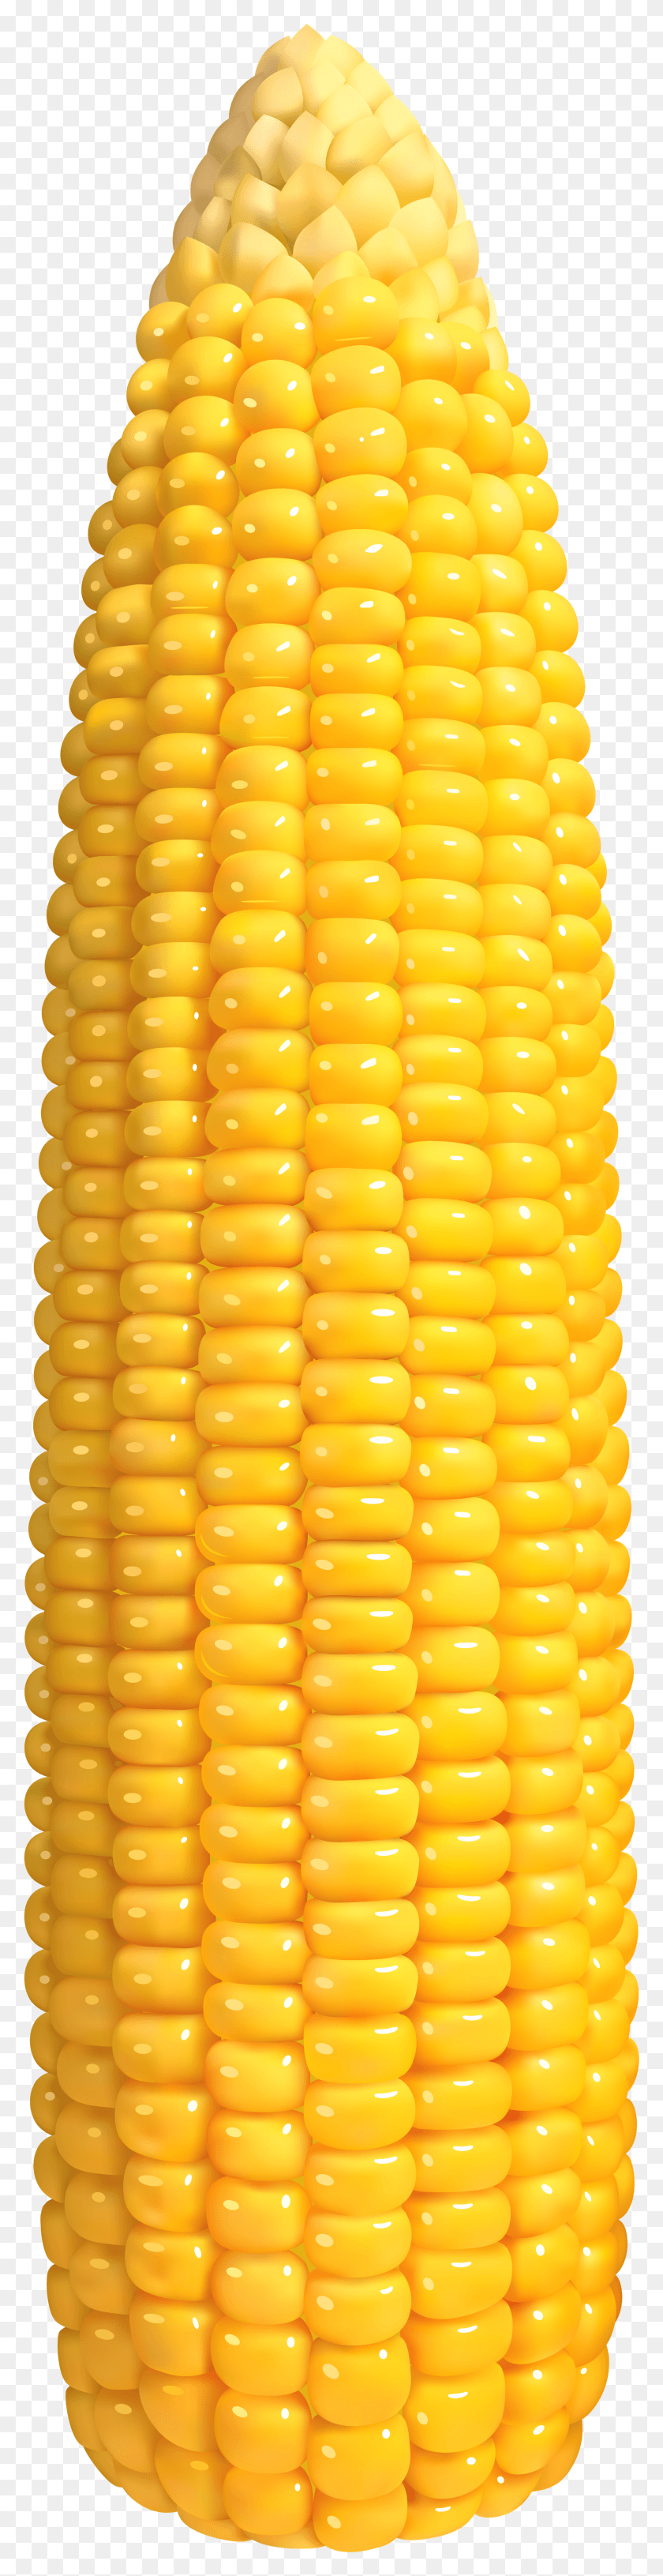 1930x7925 Png Кукуруза